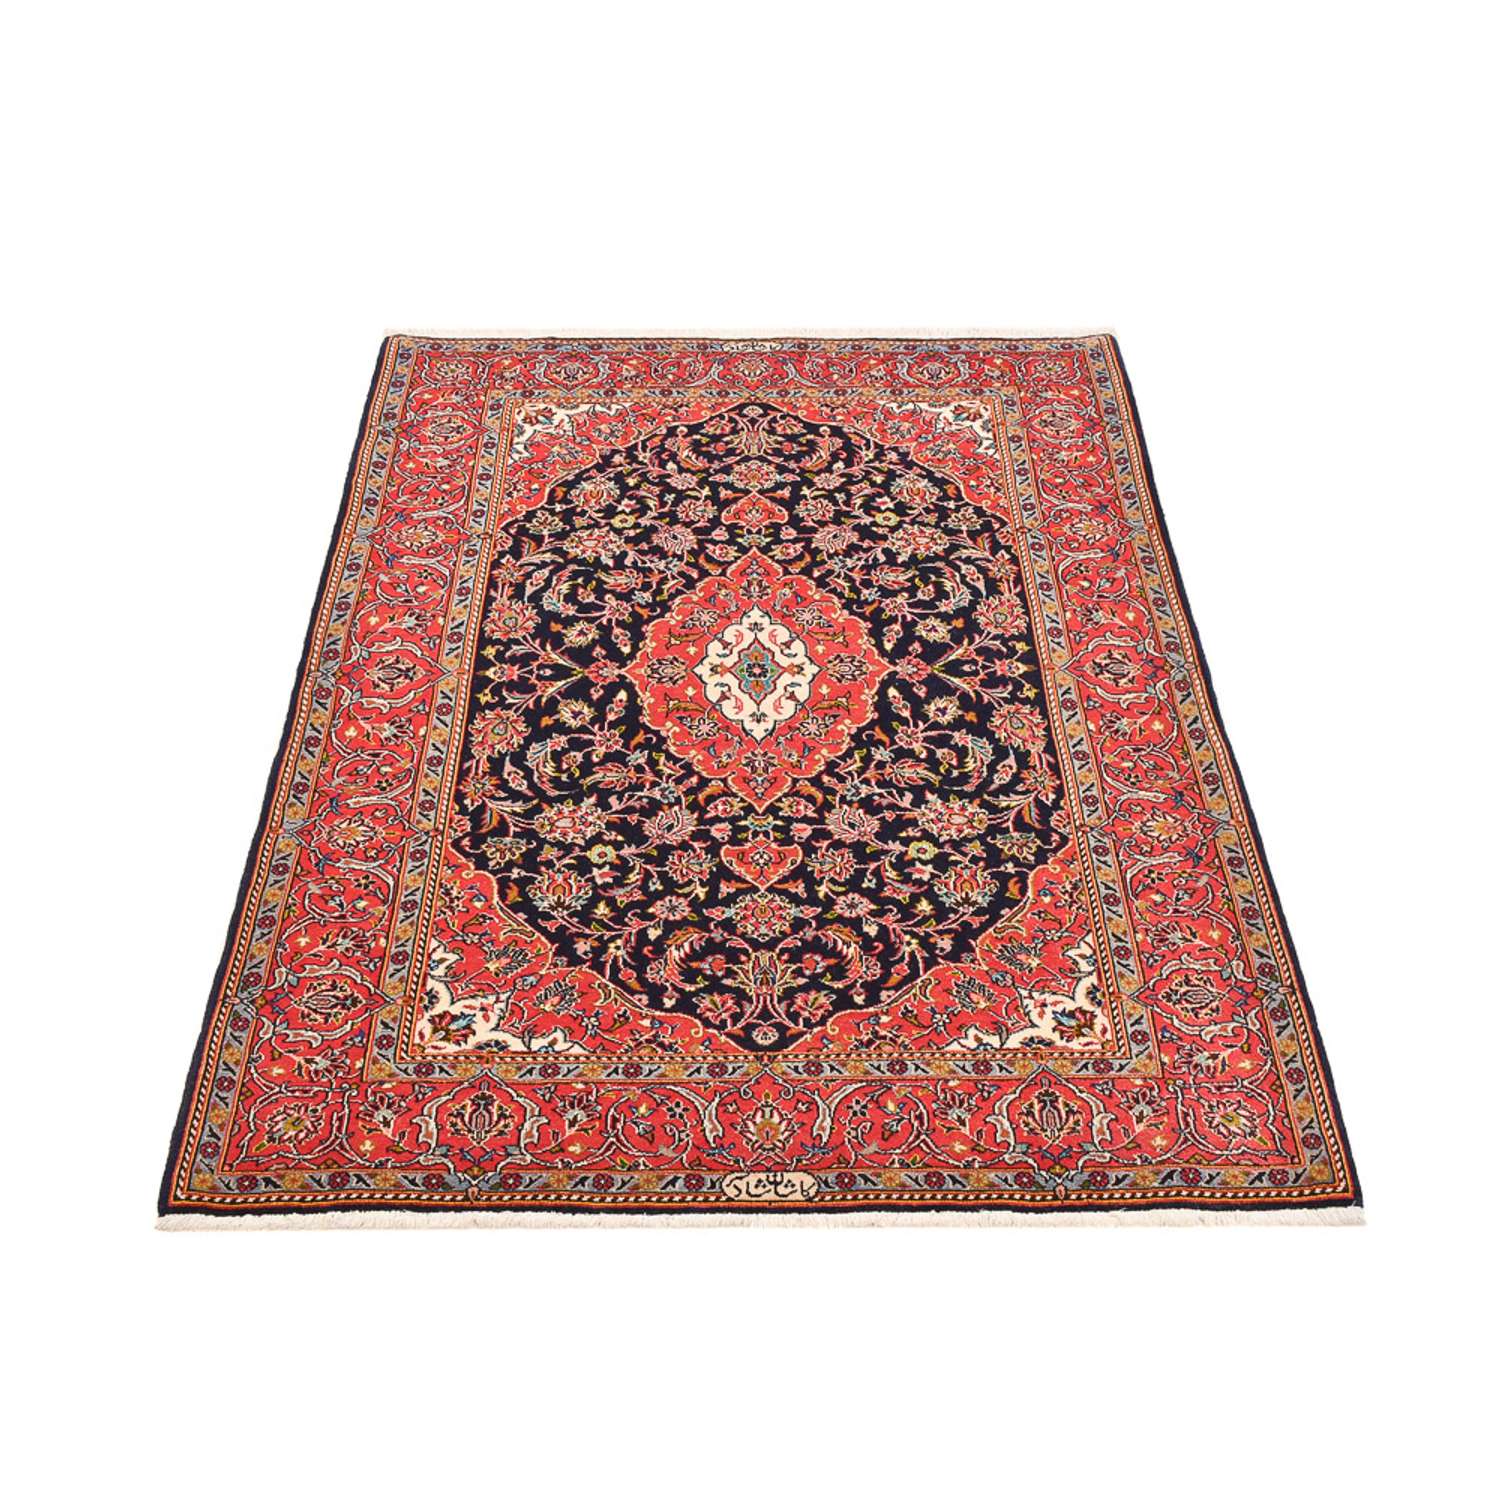 Tapis persan - Keshan - 170 x 117 cm - rouge